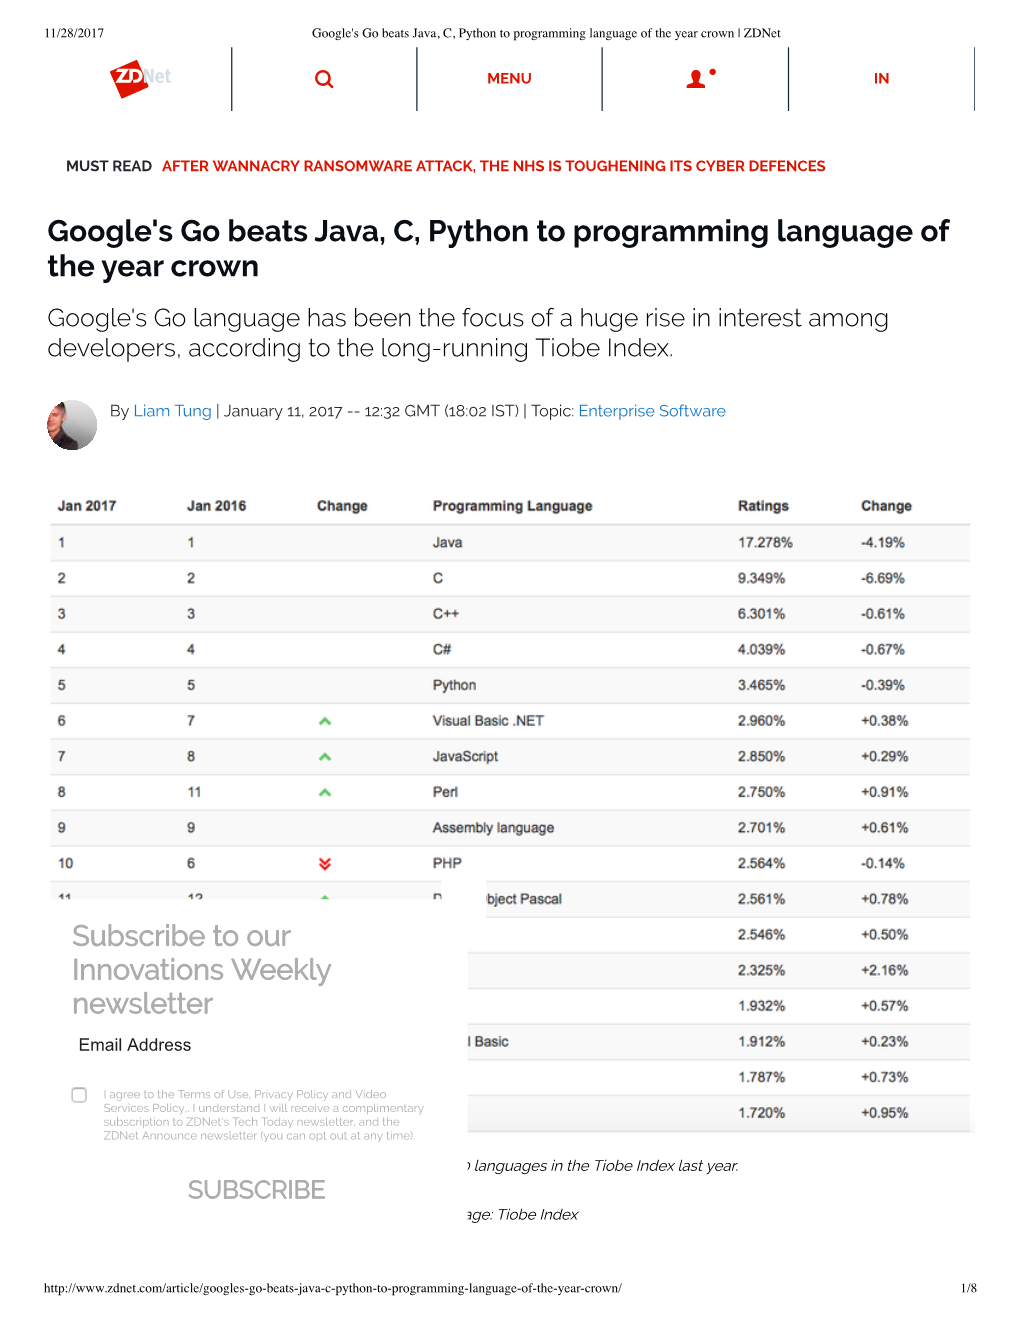 Google's Go Beats Java, C, Python to Programming Language of the Year Crown | Zdnet